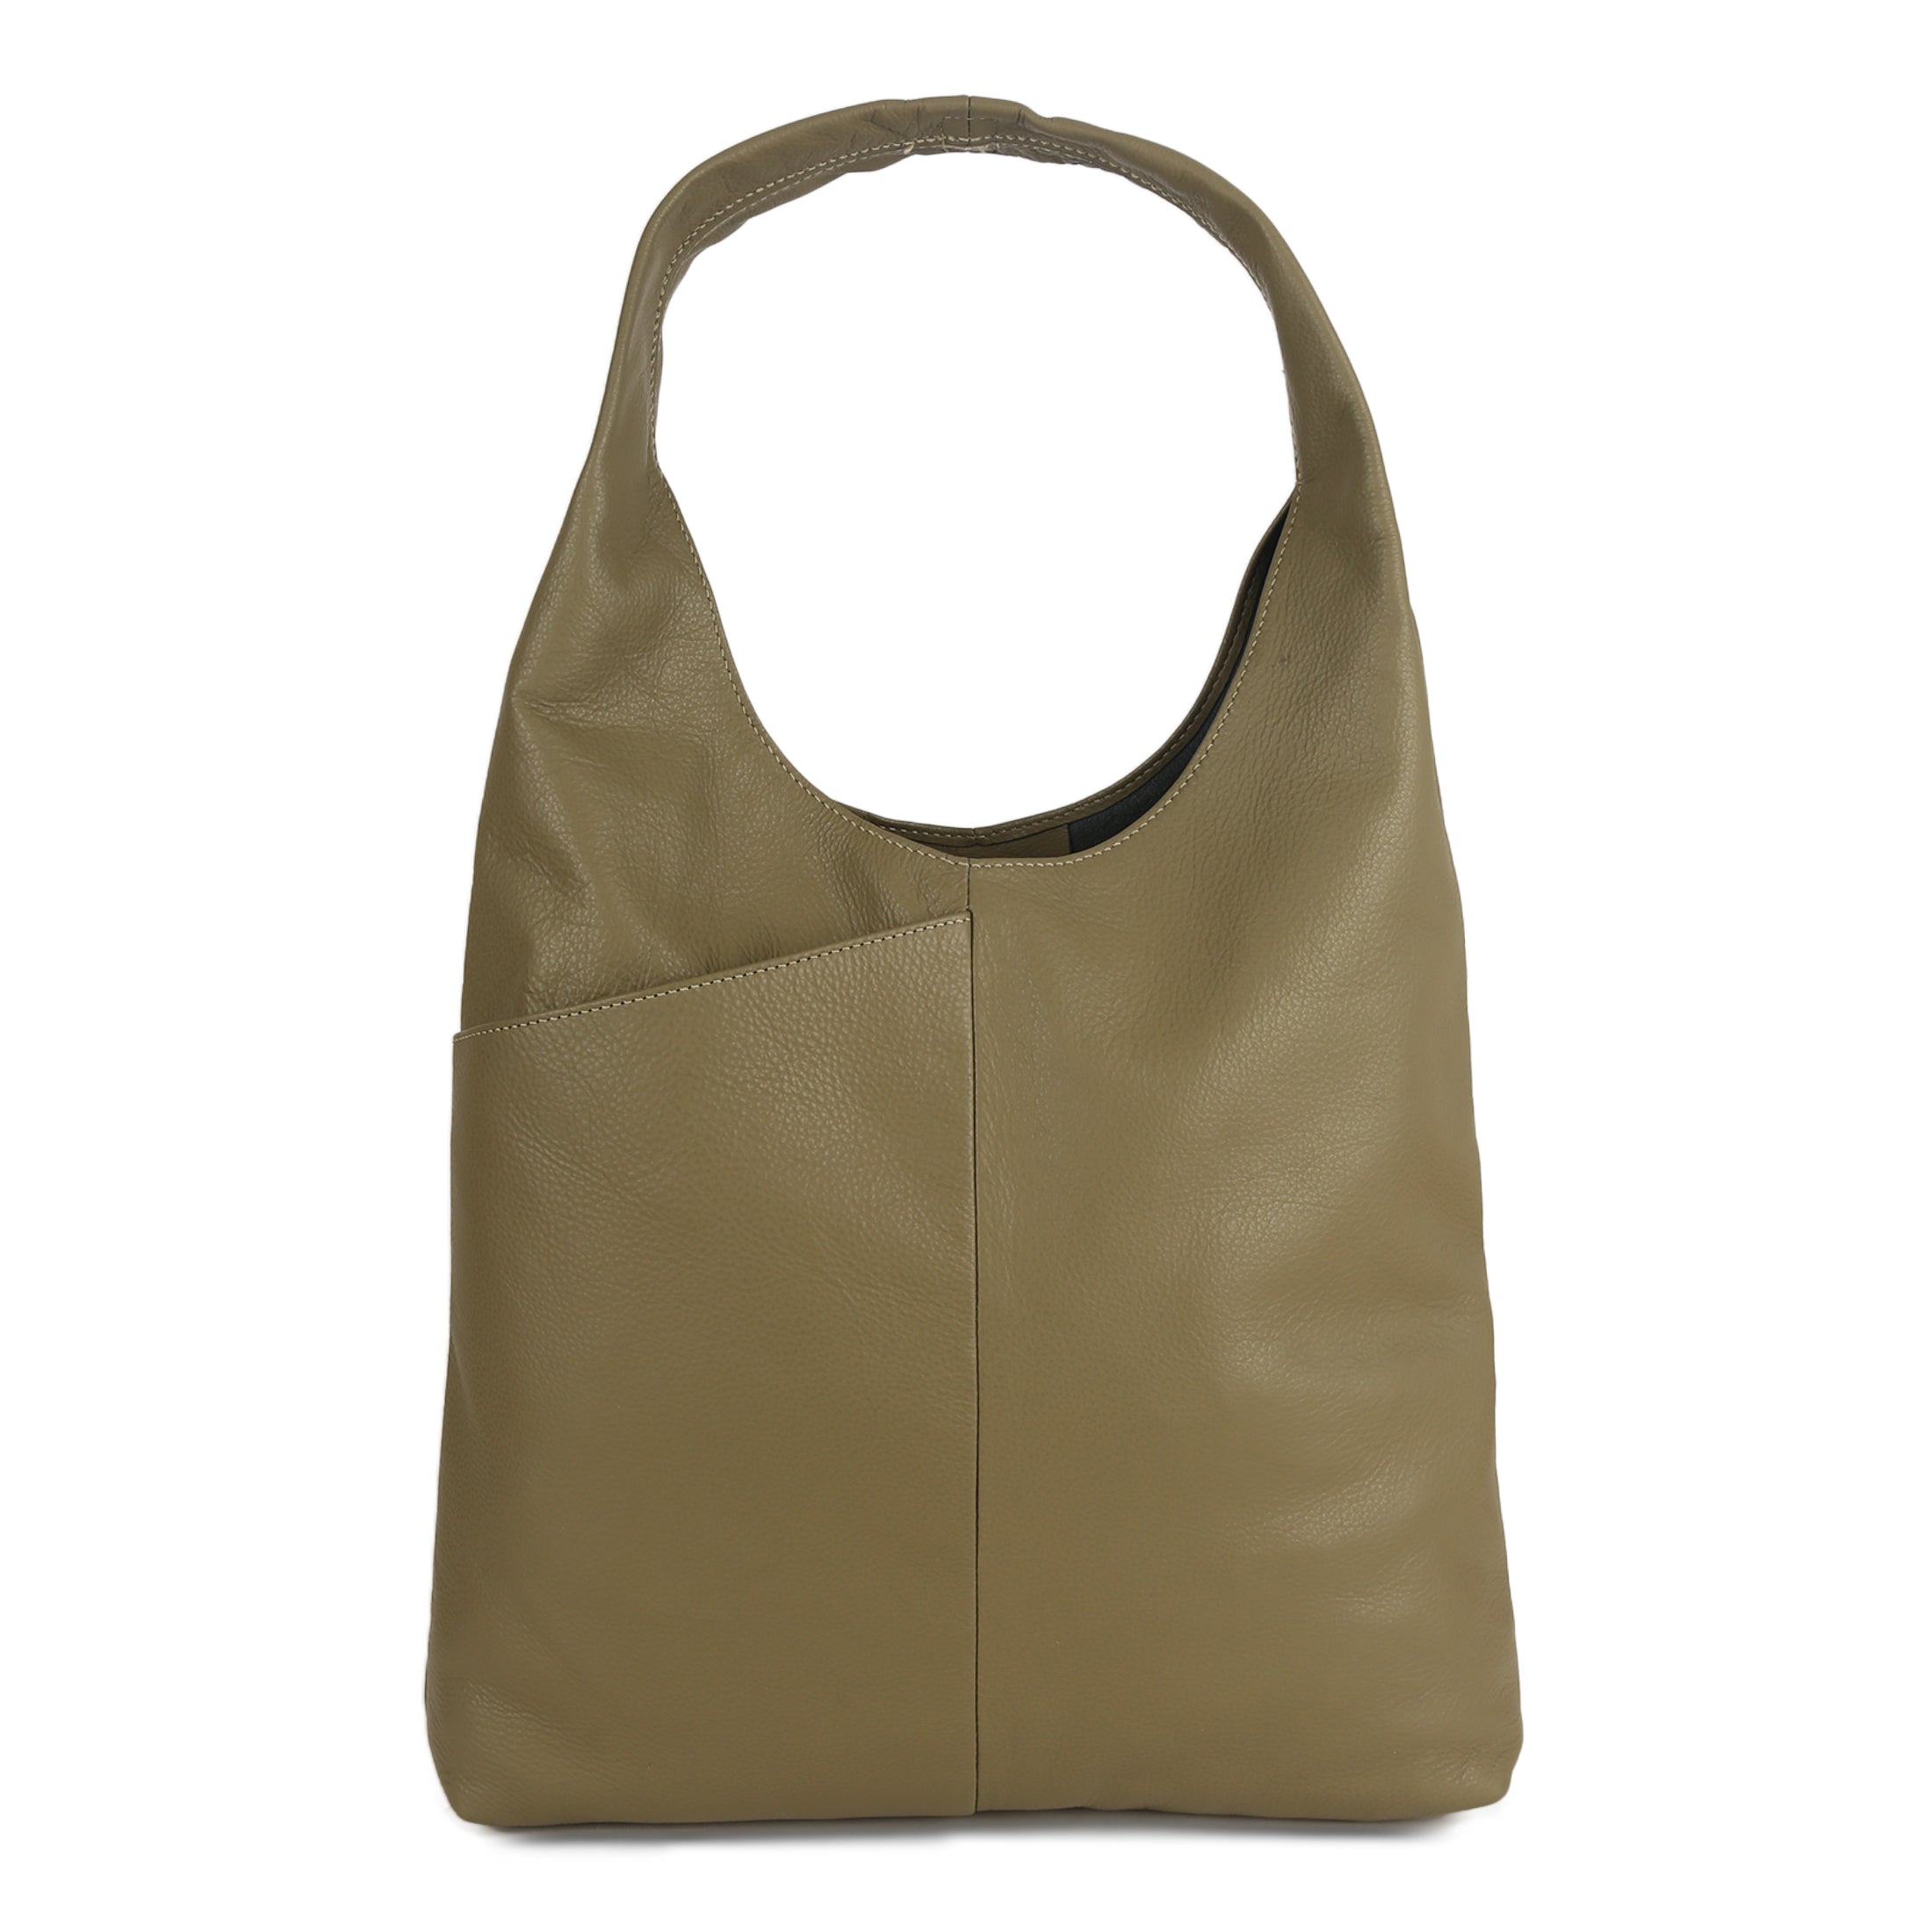 Amazon.com: QTKJ Fashion Women Girls Hand-Woven Summer Beach Big Tote Straw  Bag Handbag Big Flower Shoulder Bag with Cute Purse (Army Green) :  Clothing, Shoes & Jewelry